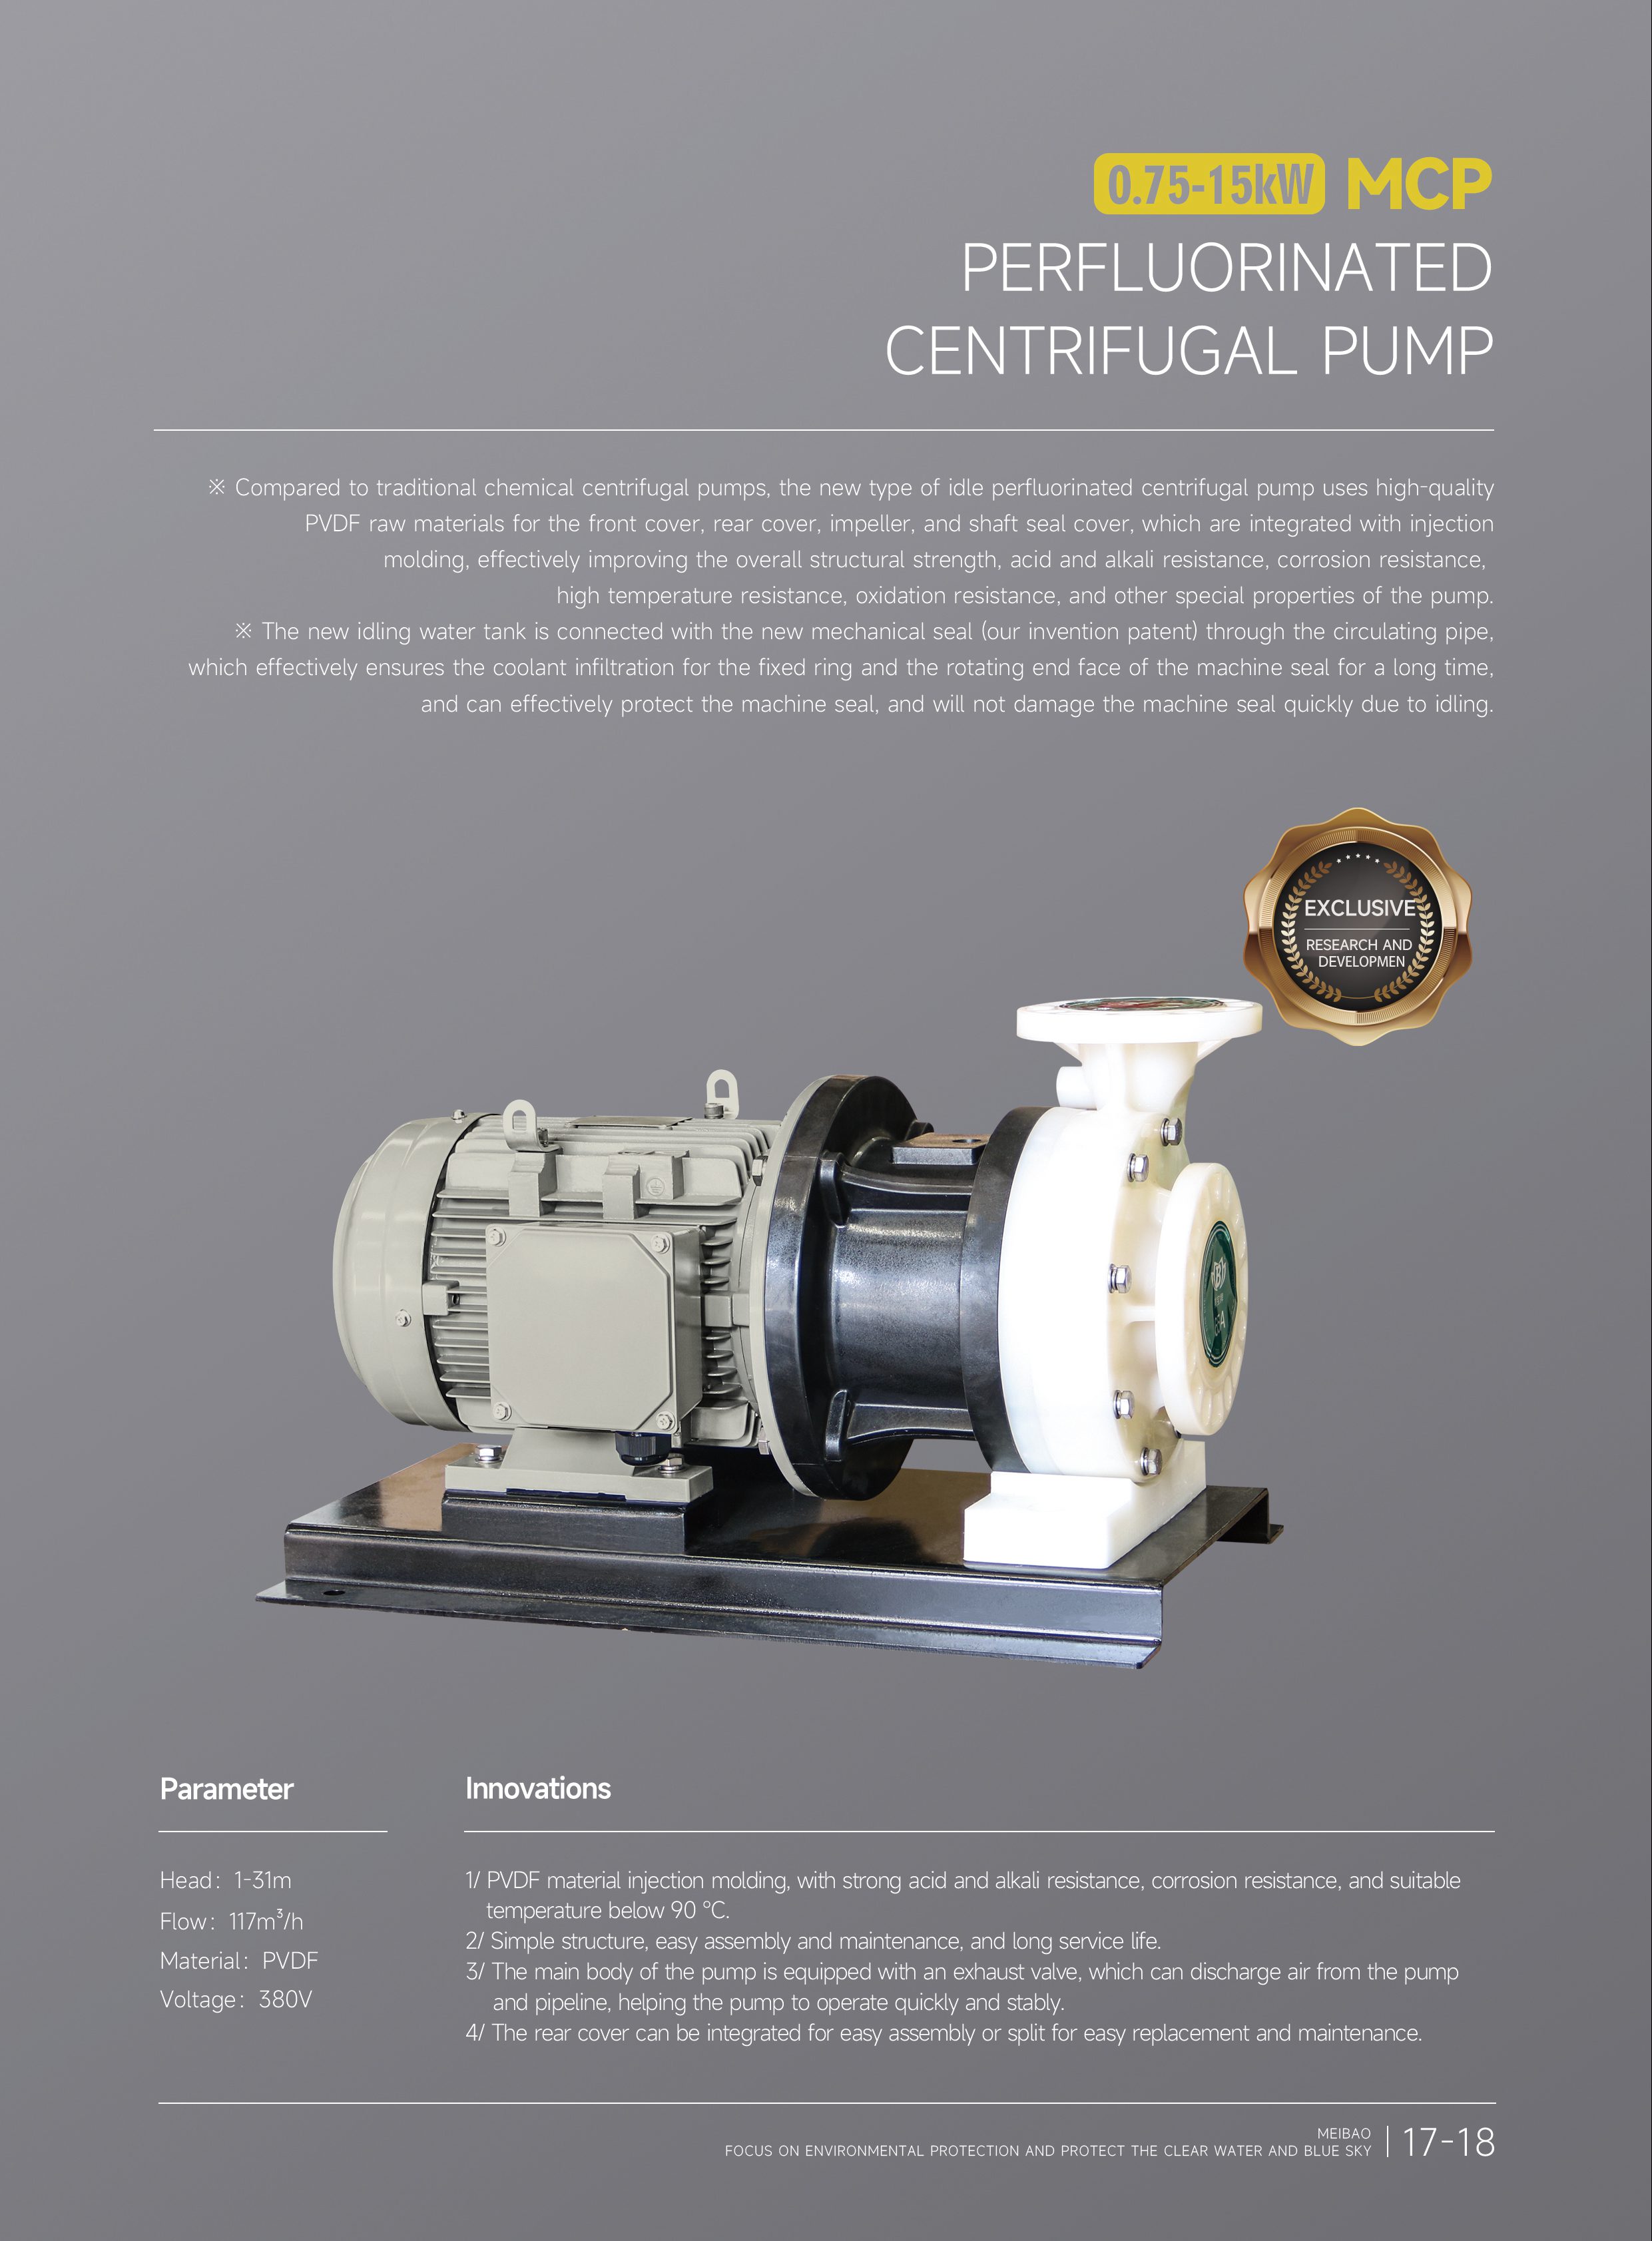 perfluorinated centrifugal pump(全氟离心泵).jpg